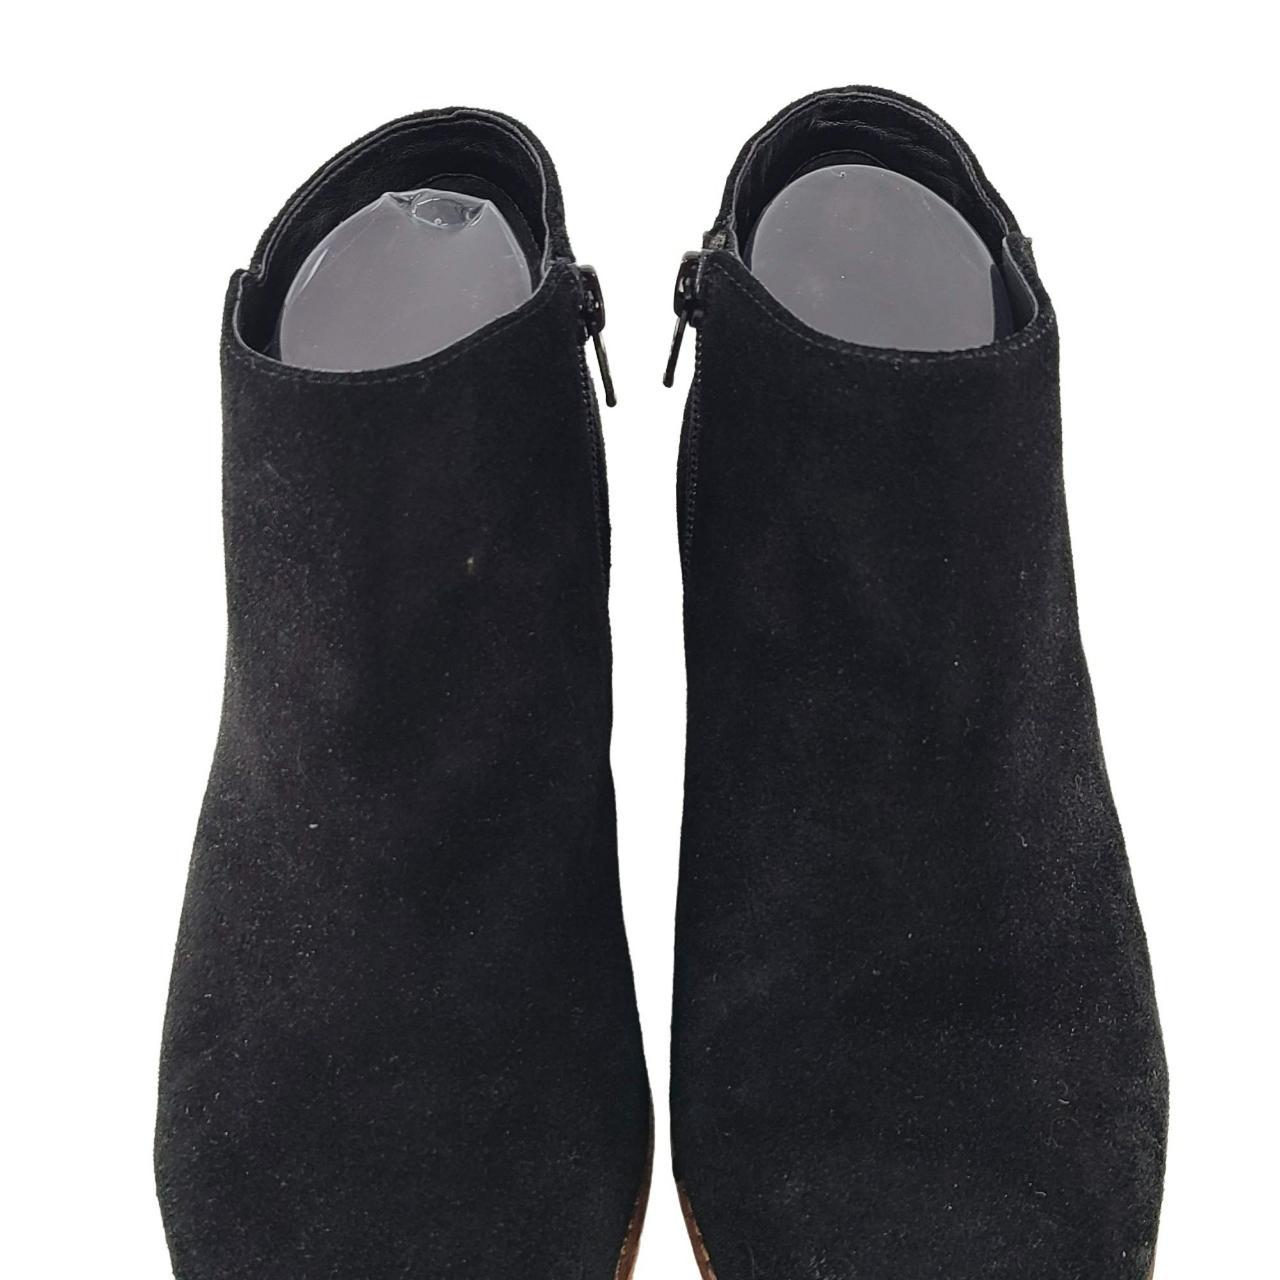 GB Gianni Bini Women's Ankle Boots Black Size... - Depop